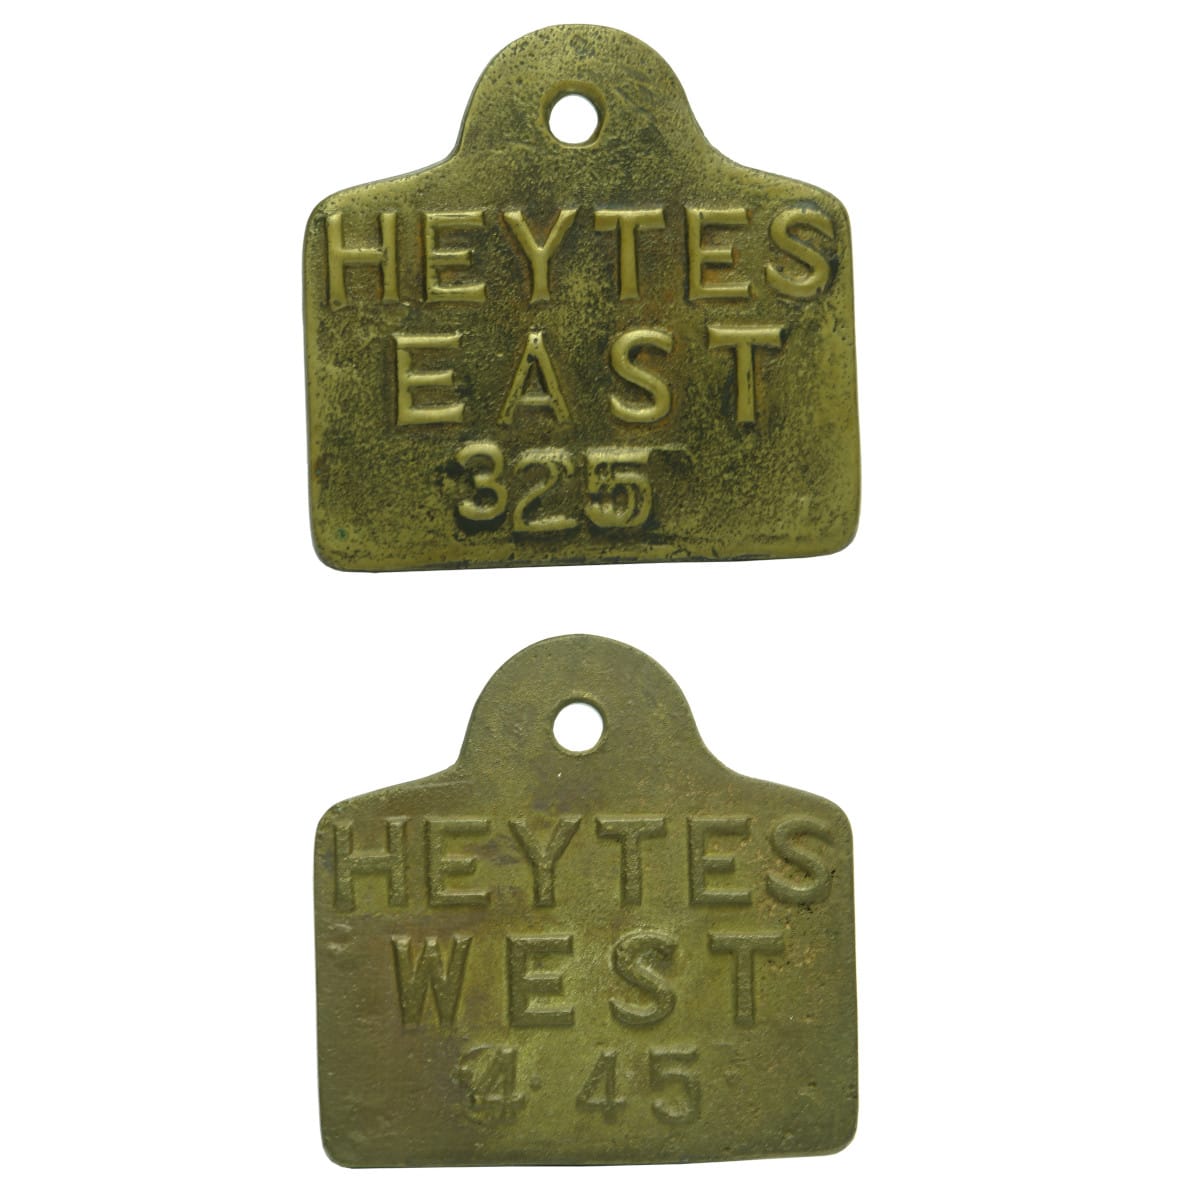 Pair of Brass Cow Tags. Heytes East & West. 325 & 445. (Heytesbury, Victoria)